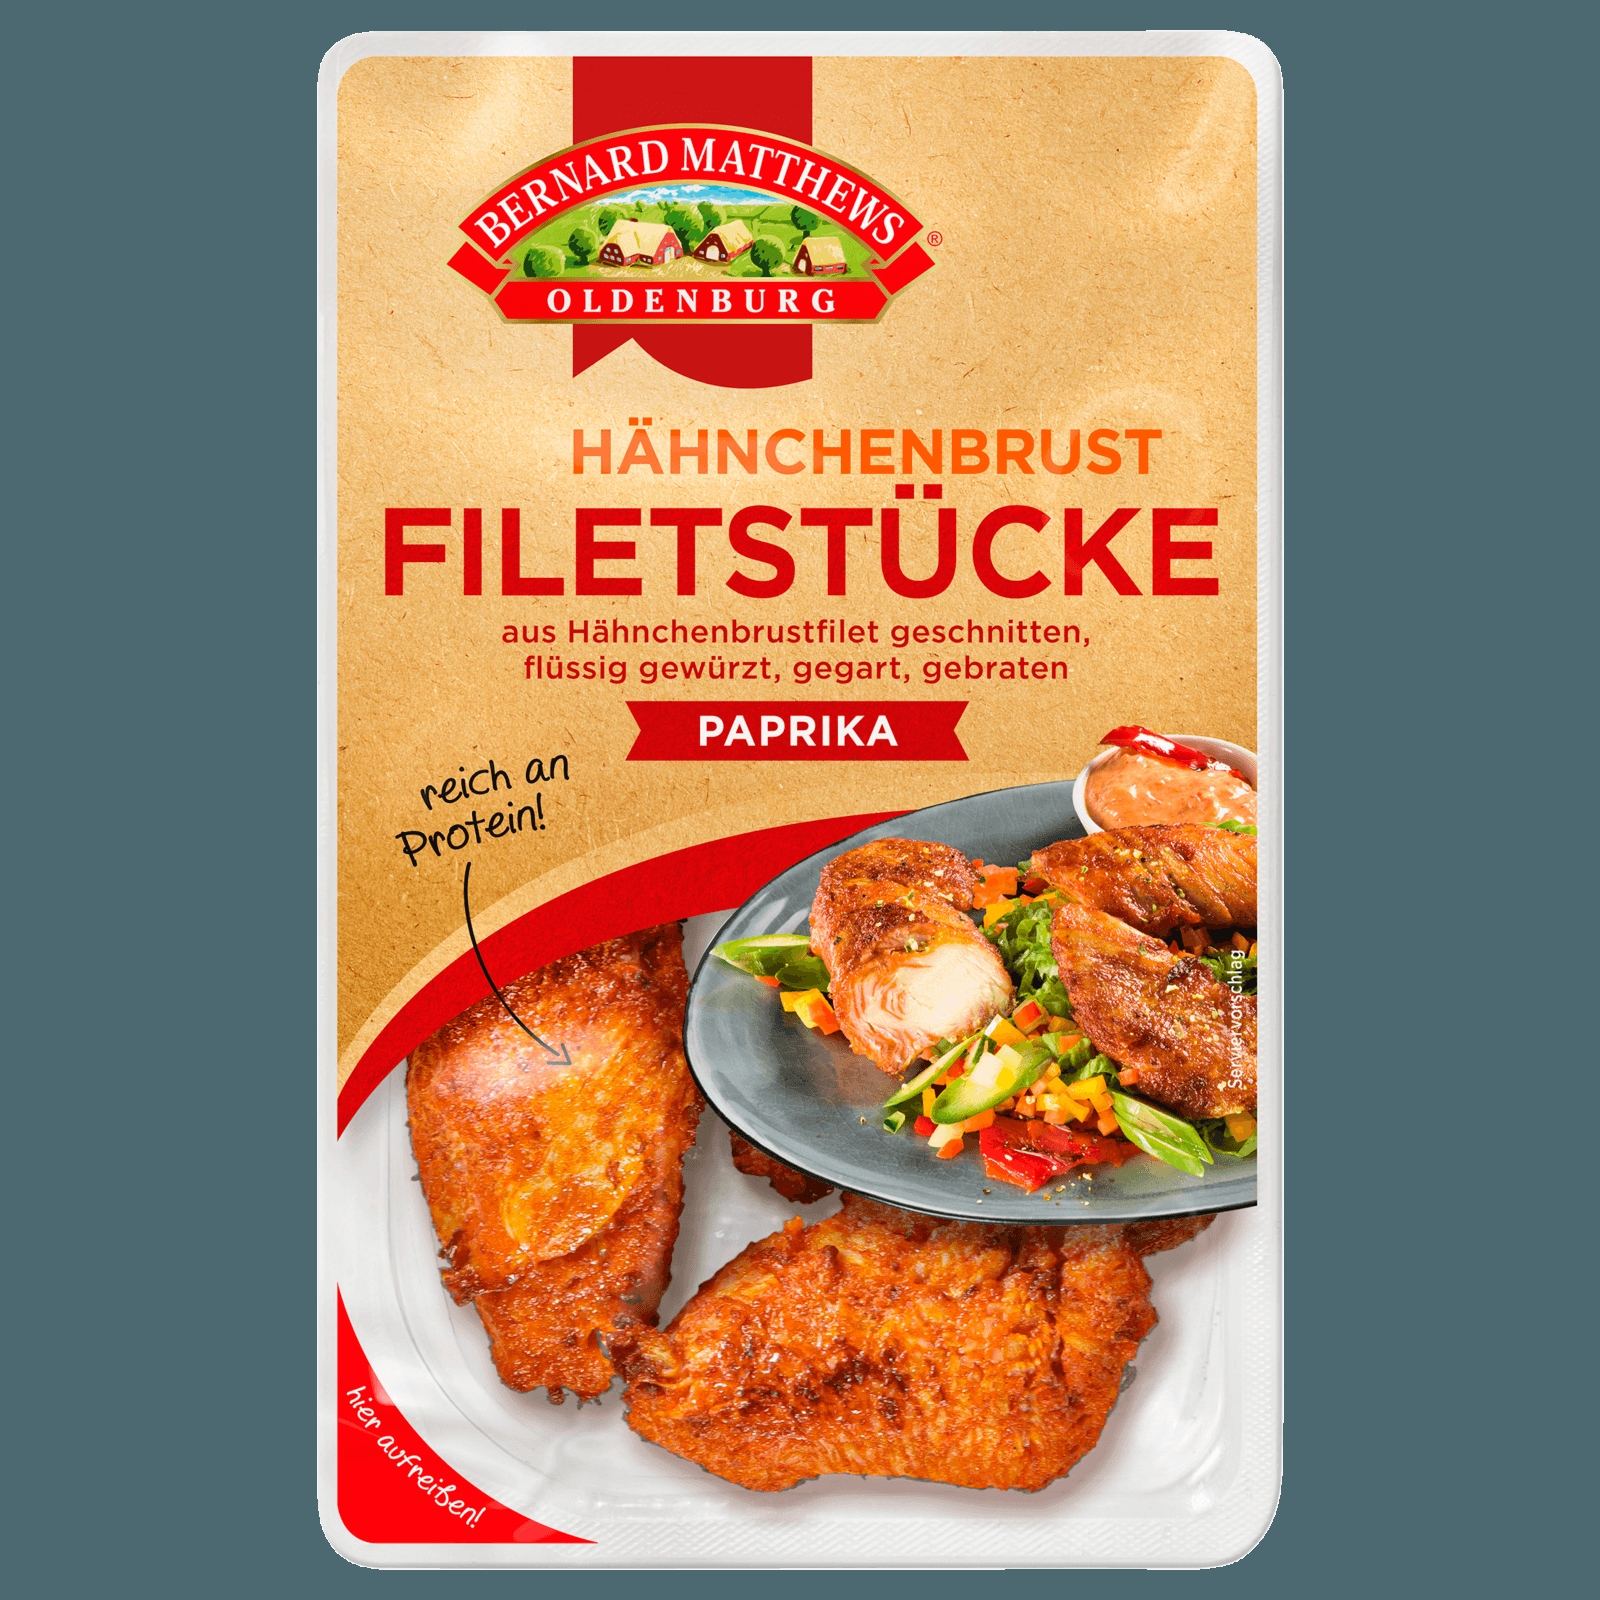 Bernard Matthews Oldenburg Hähnchenbrust-Filetstücke Paprika 150g  für 2.99 EUR